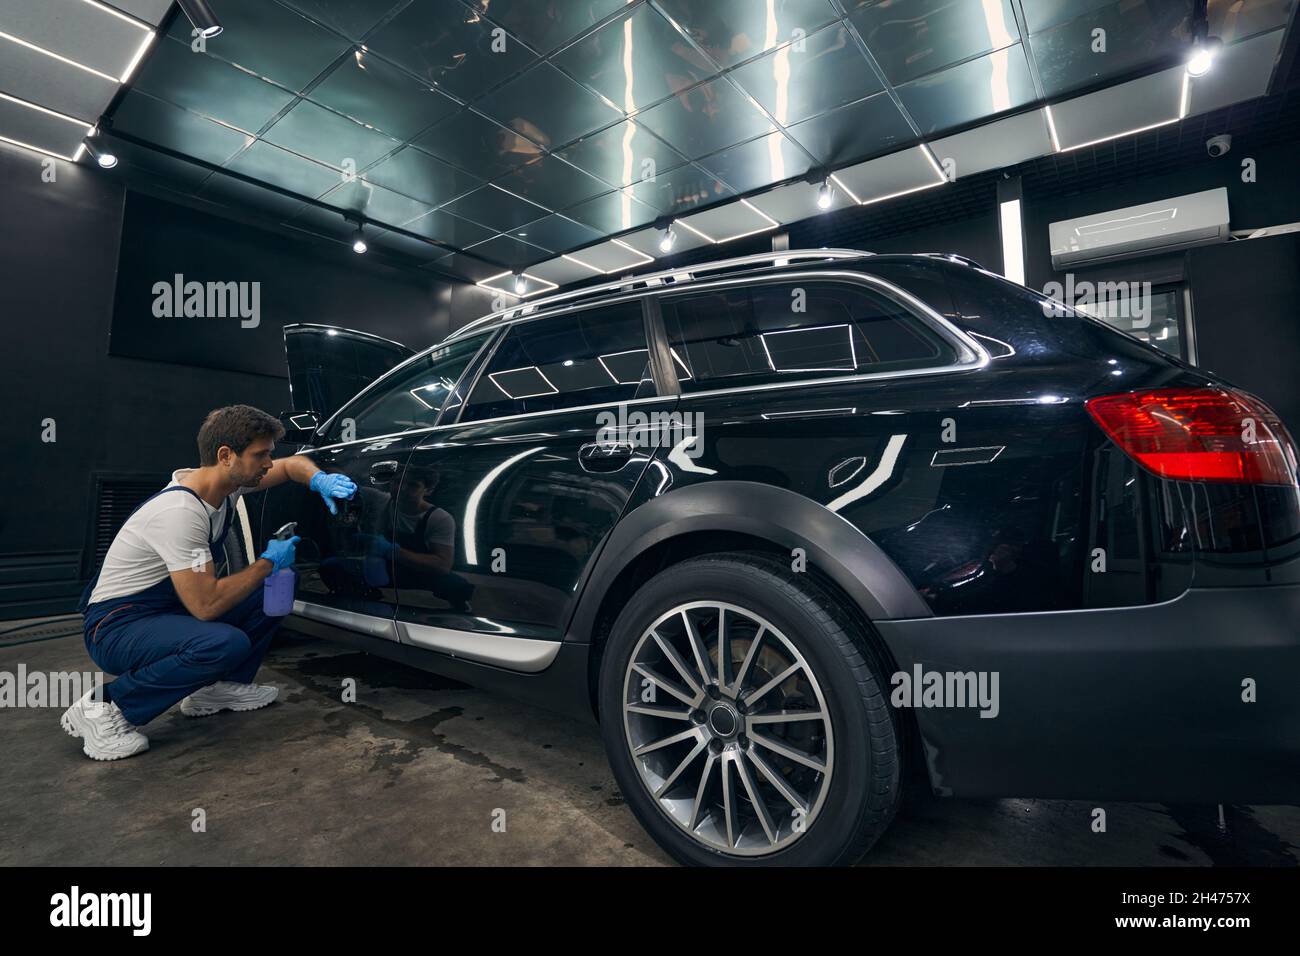 Black car undergoing cleaning procedure in automotive repair shop Stock Photo